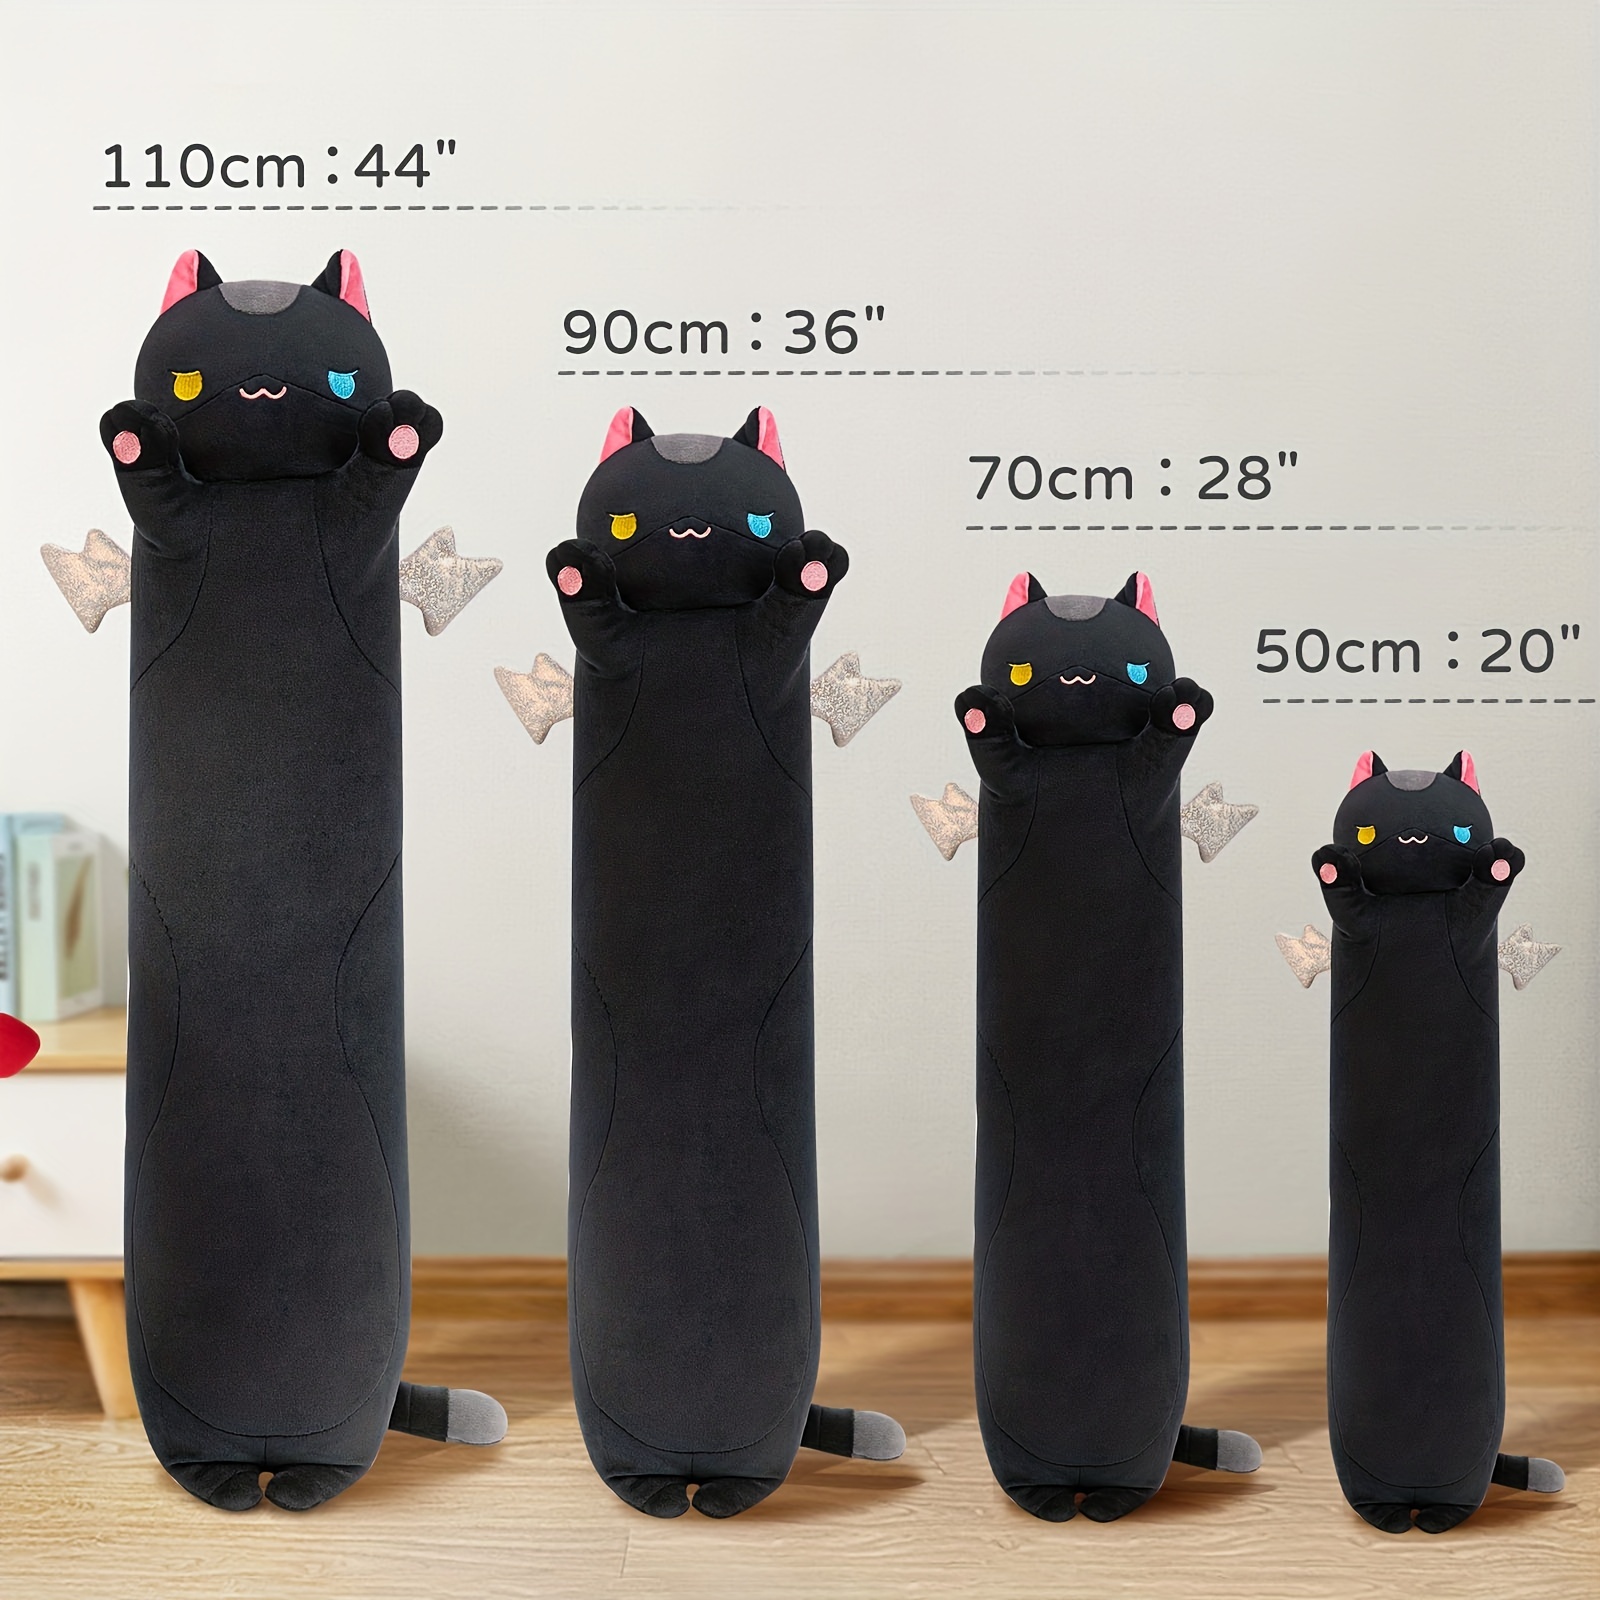 Mewaii Long Cat Plush Body Pillow, 20” Cute Black Cat Stuffed Animals  Kawaii Soft Plushies, Kitten Plush Pillow Doll Toy Gift for Girls Boys